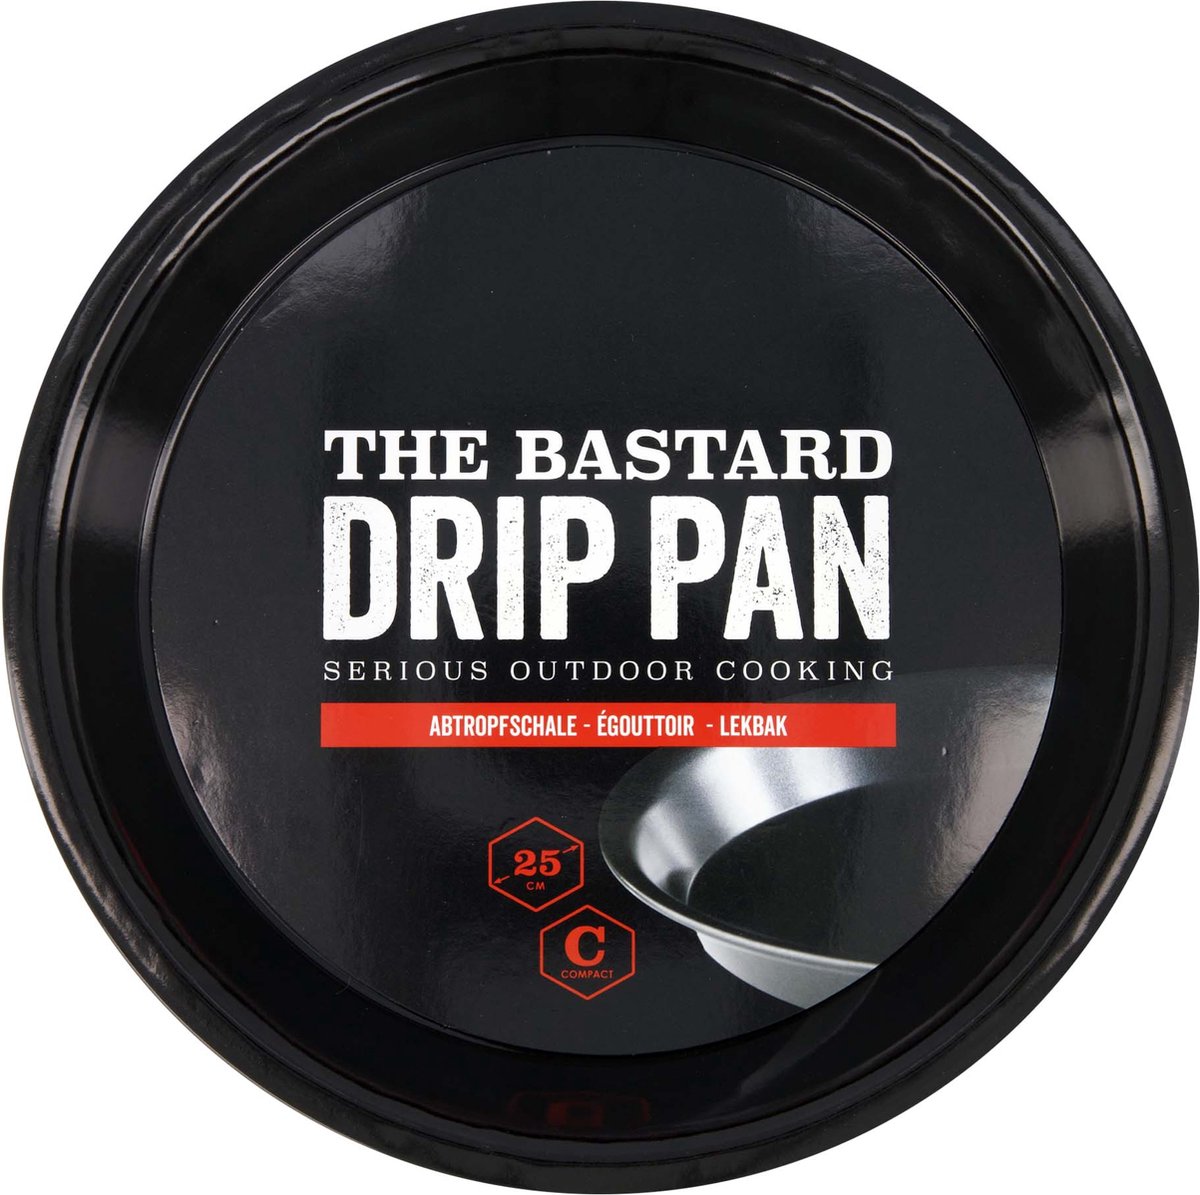 The Bastard Drip Pan - Compact - BBQ Drip pan - The Bastard